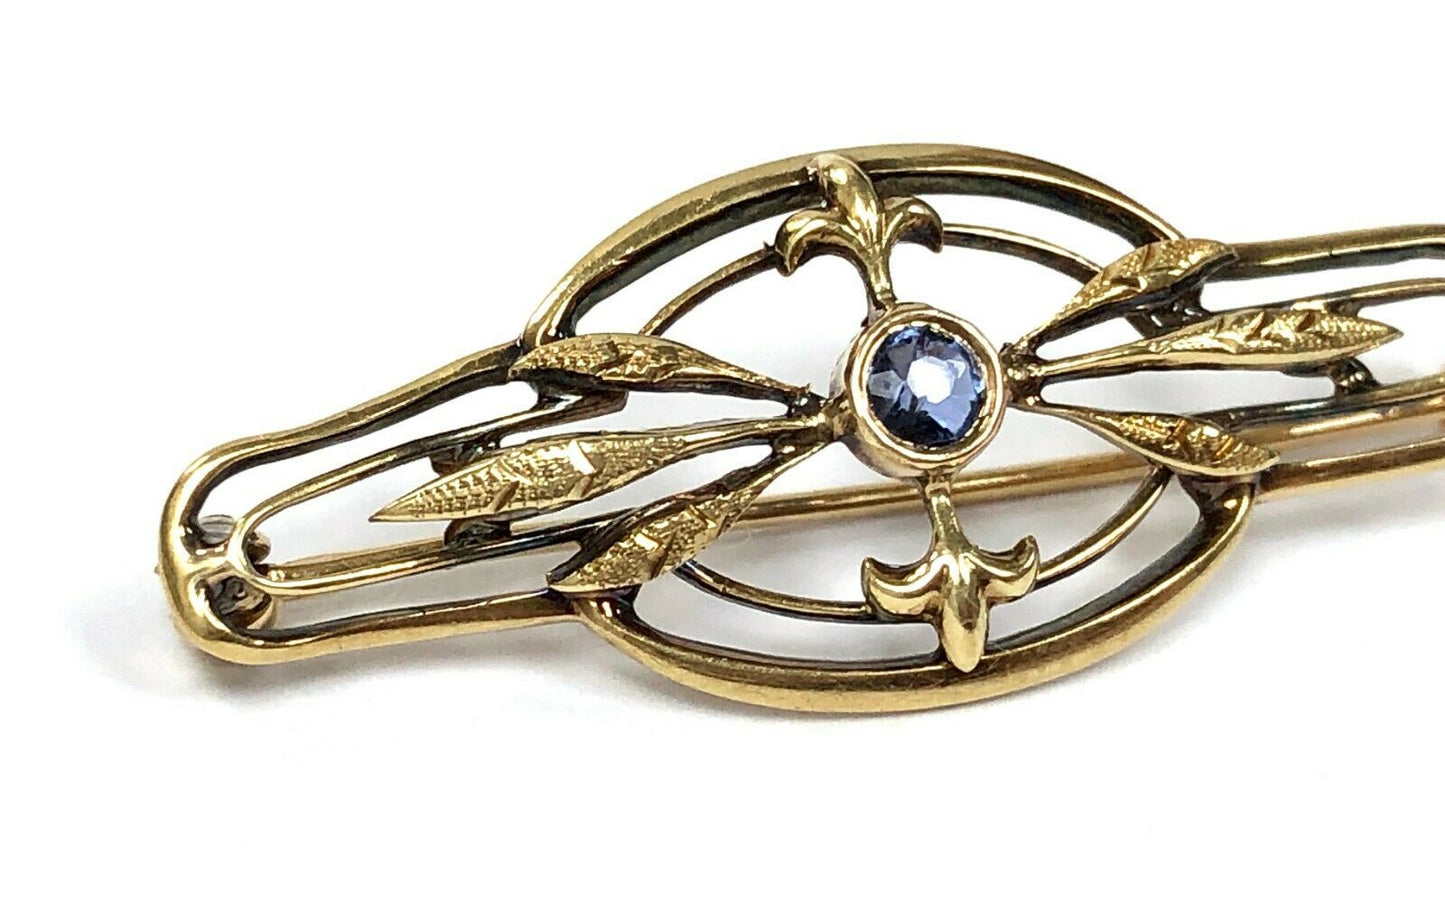 Art Nouveau Era Sapphire Brooch in 14K Gold